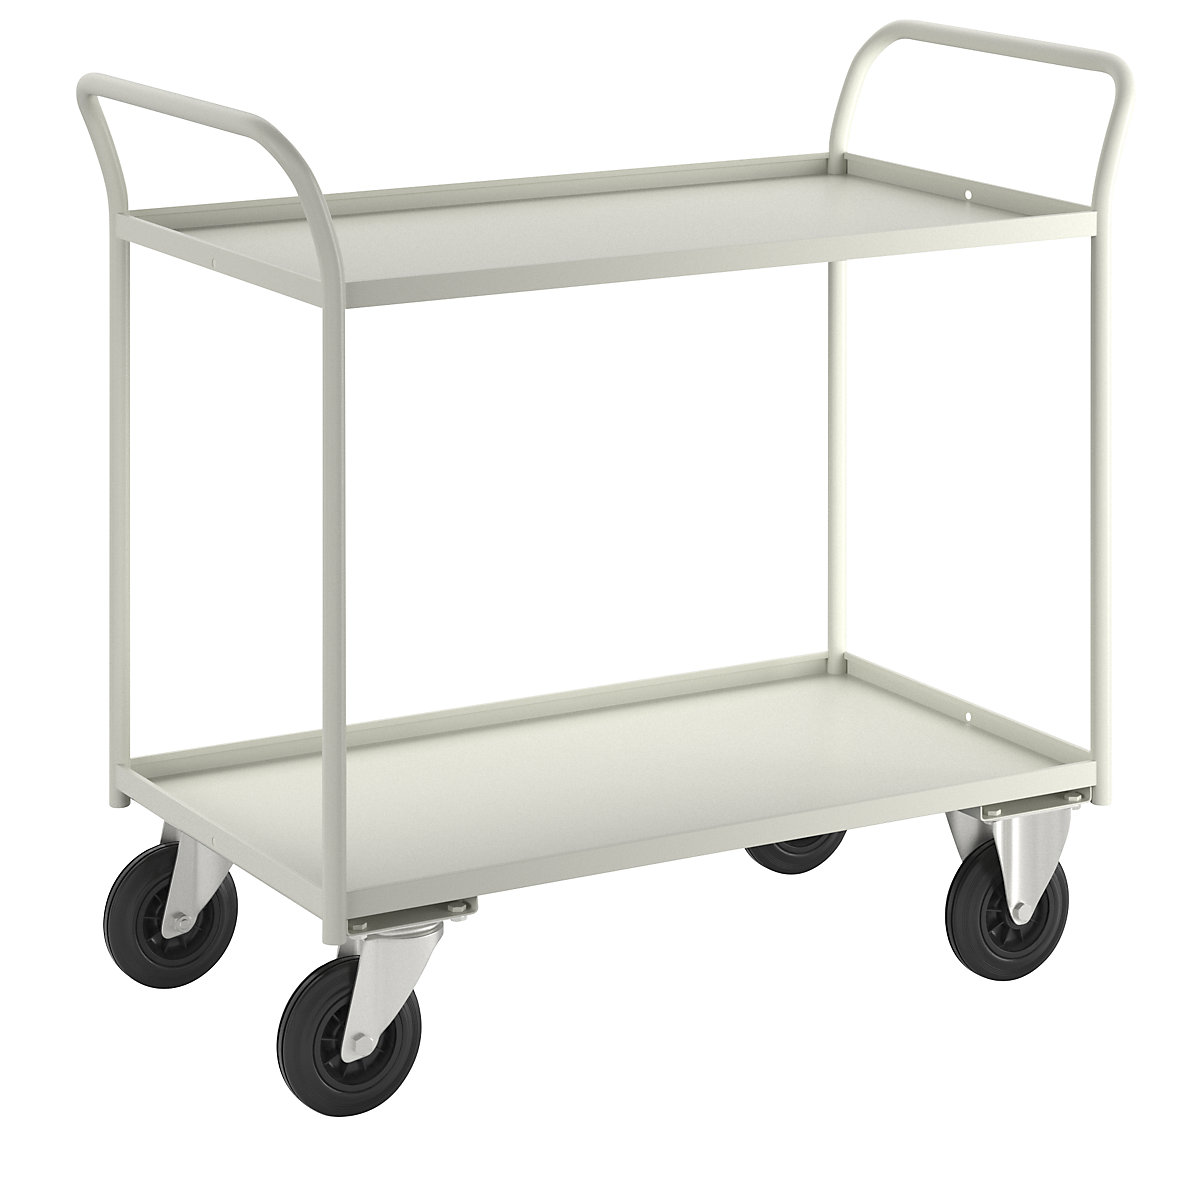 KM41 table trolley – Kongamek, 2 shelves with raised edges, LxWxH 1070 x 550 x 1000 mm, white, 2 swivel castors and 2 fixed castors-2